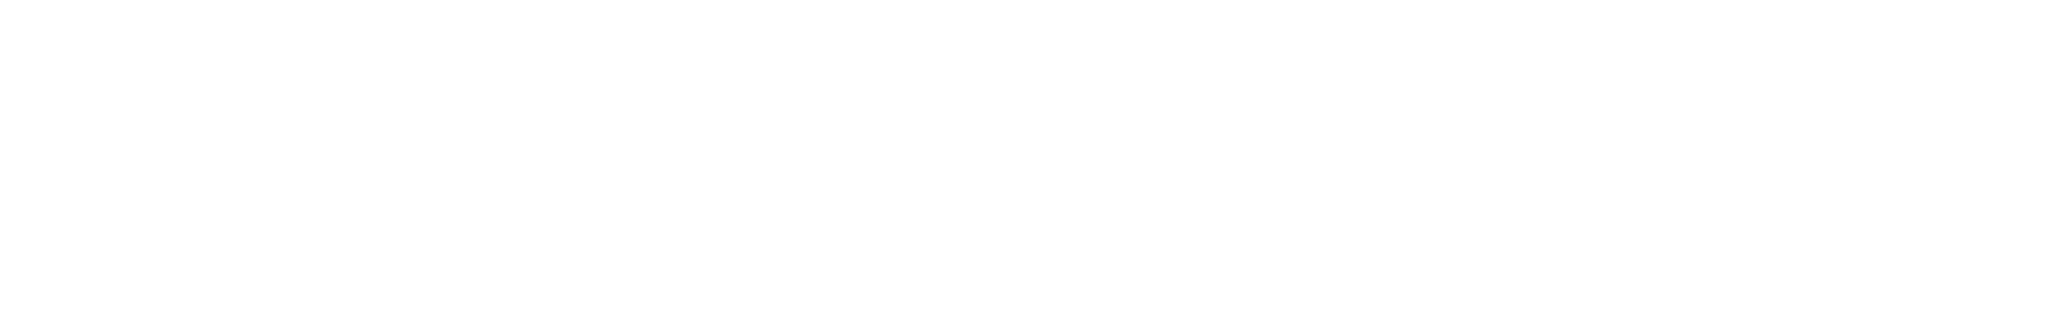 Duro and Carecubes logos